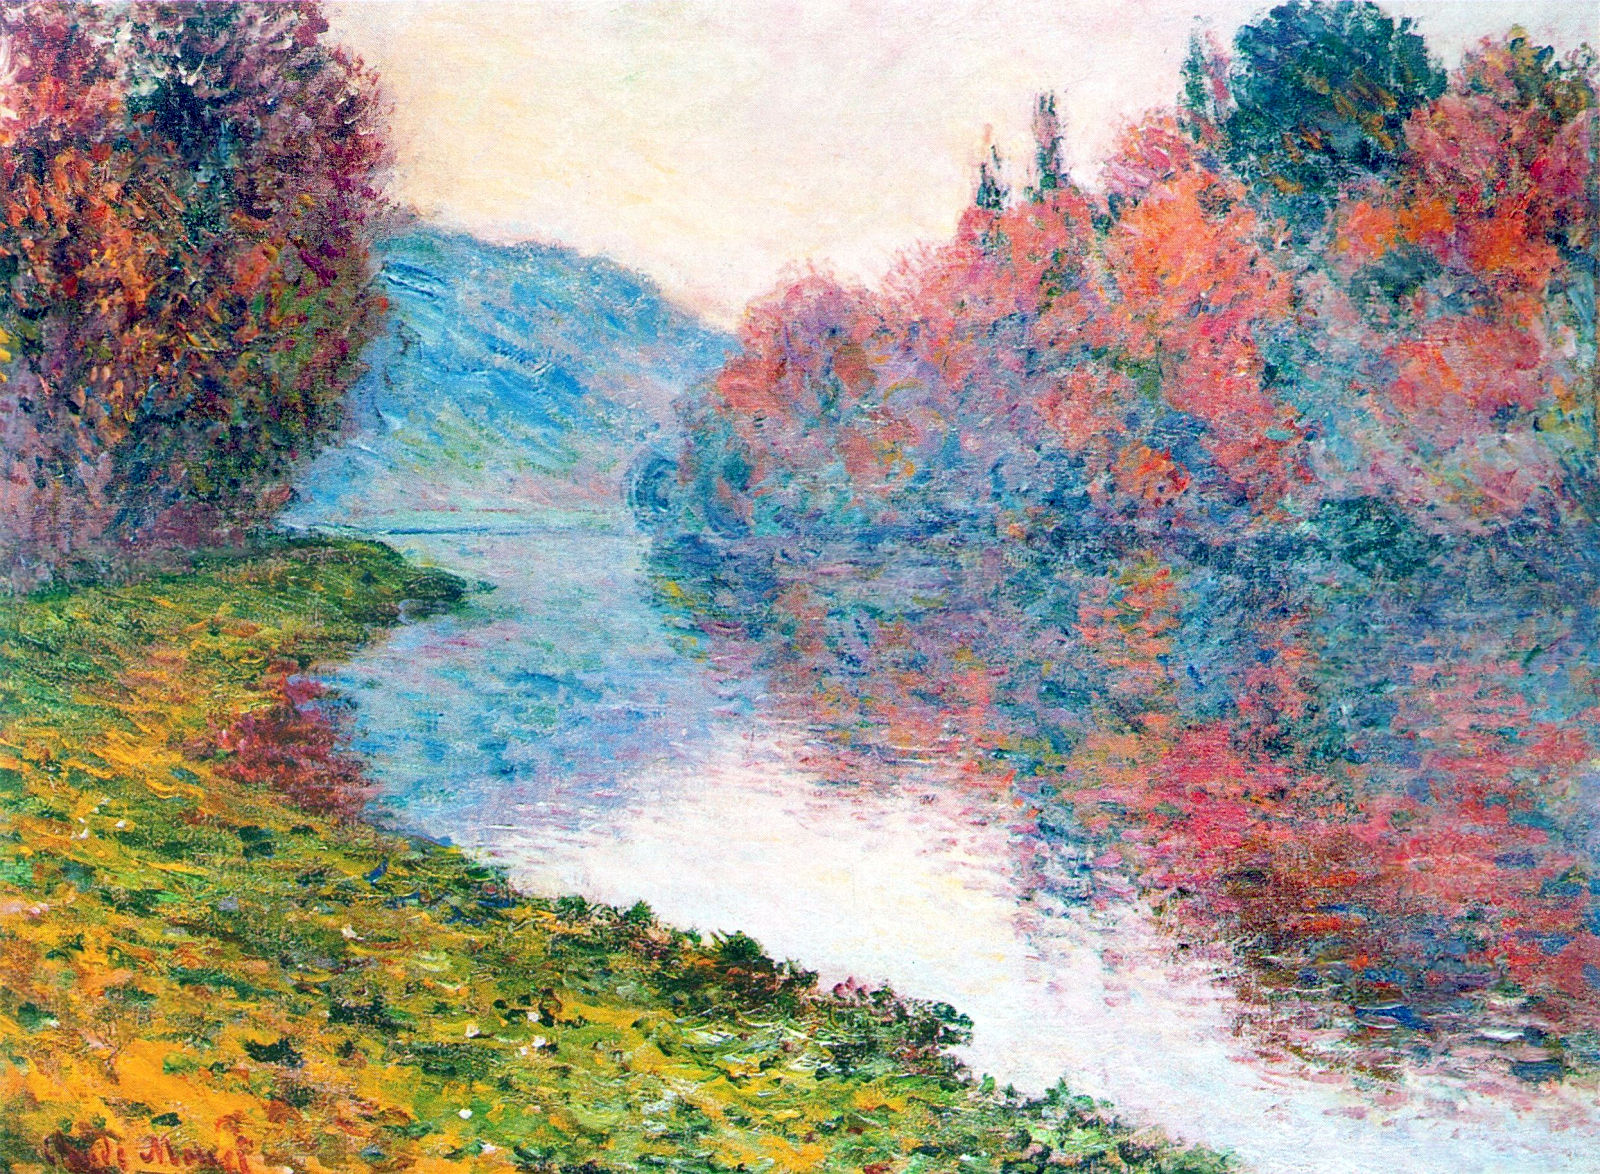 Claude+Monet-1840-1926 (124).jpg